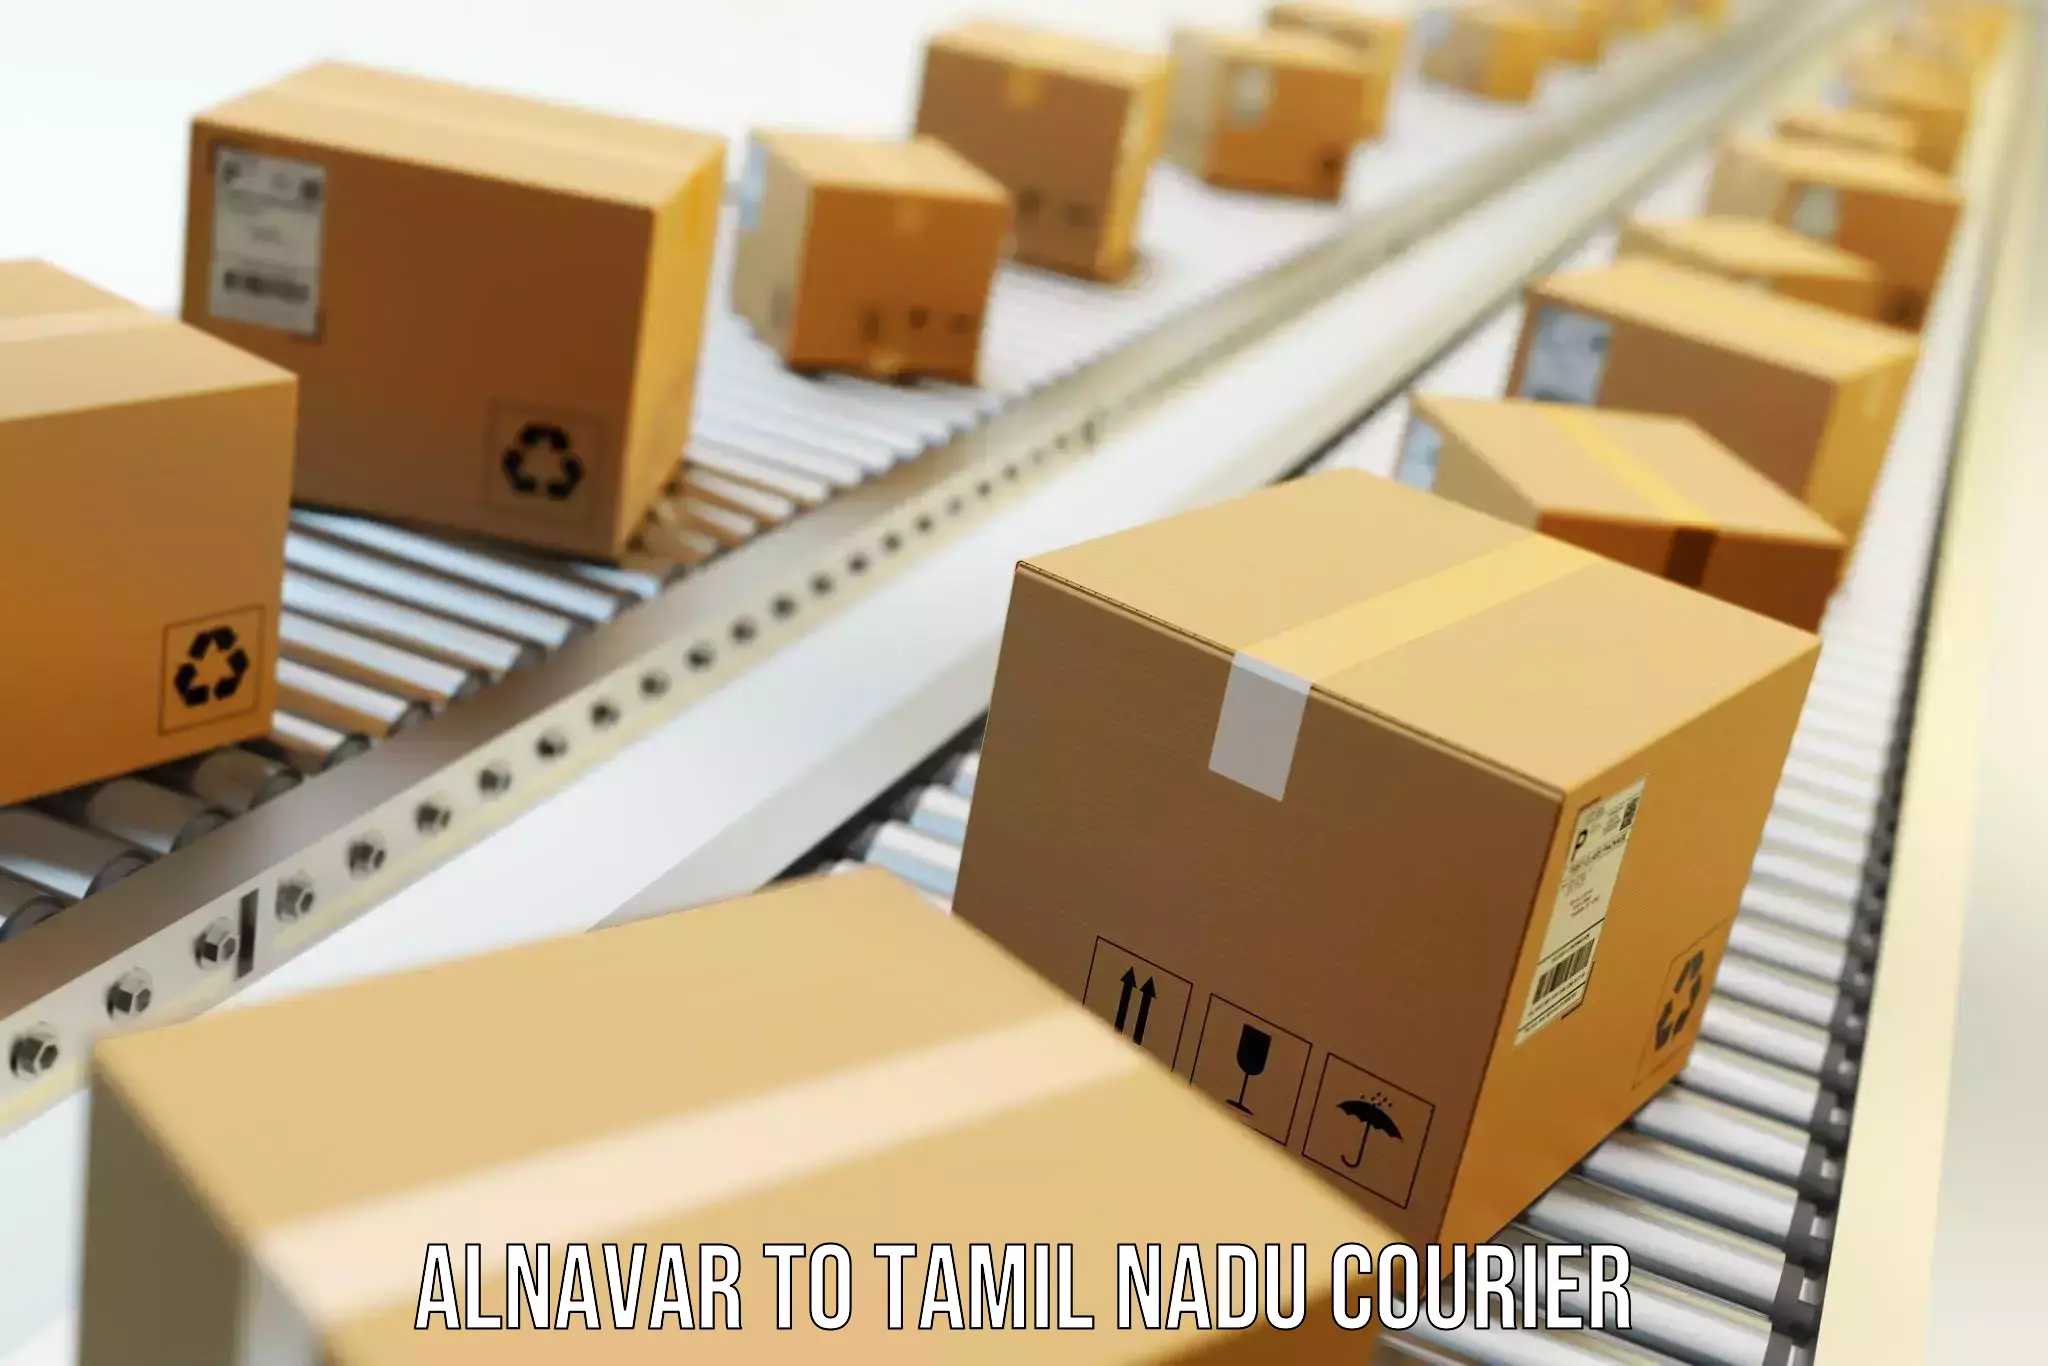 Furniture delivery service Alnavar to Coimbatore